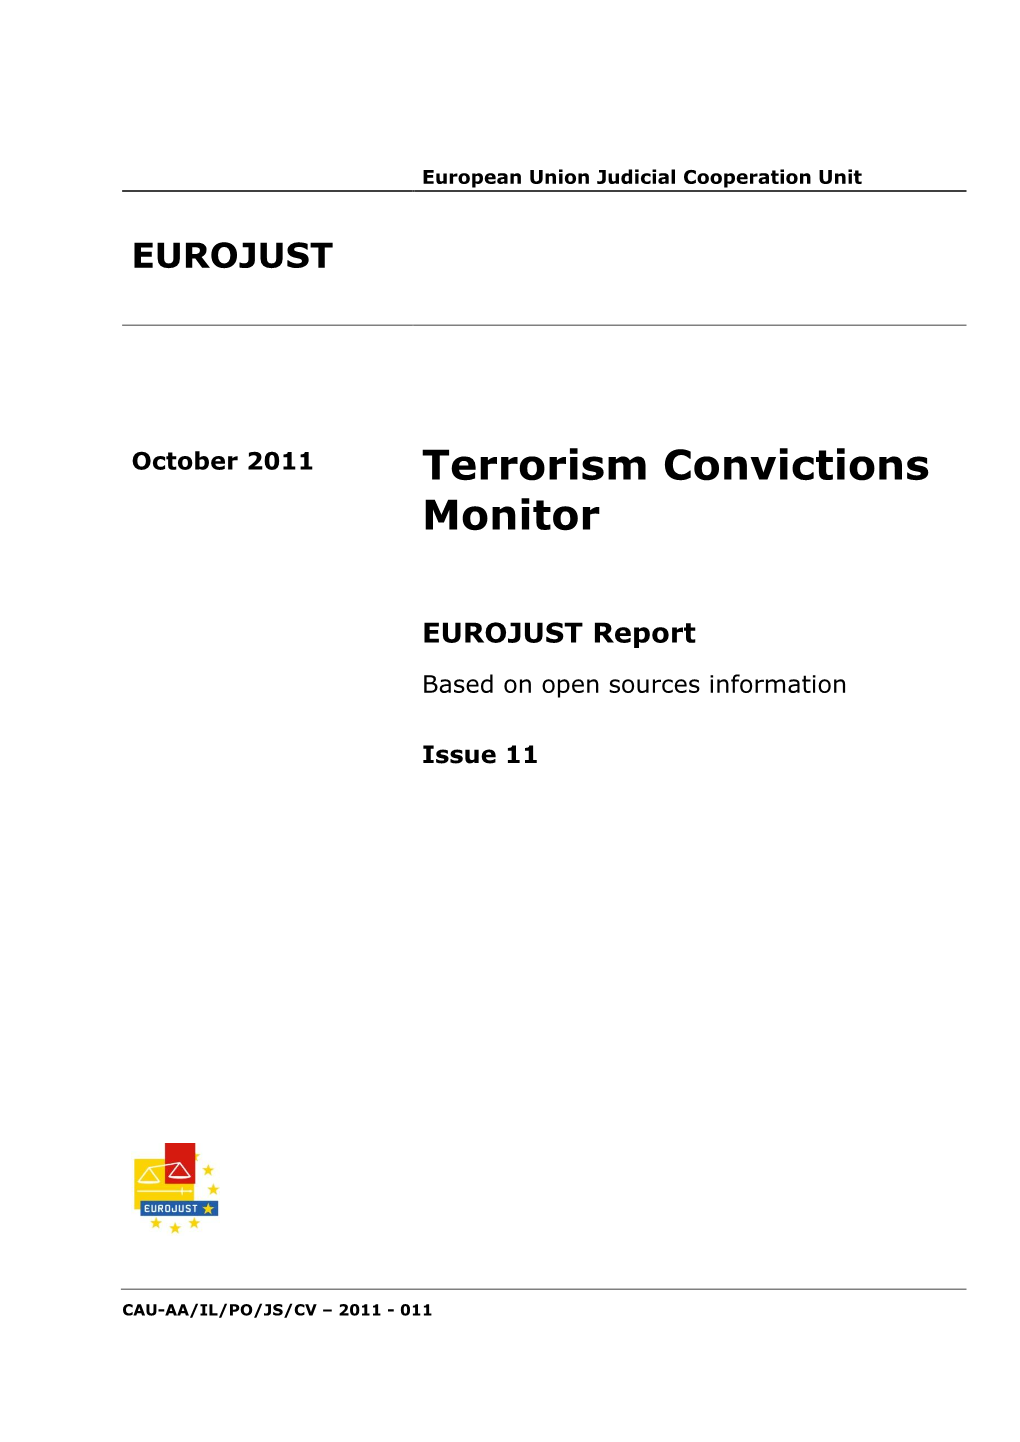 Terrorism Convictions Monitor